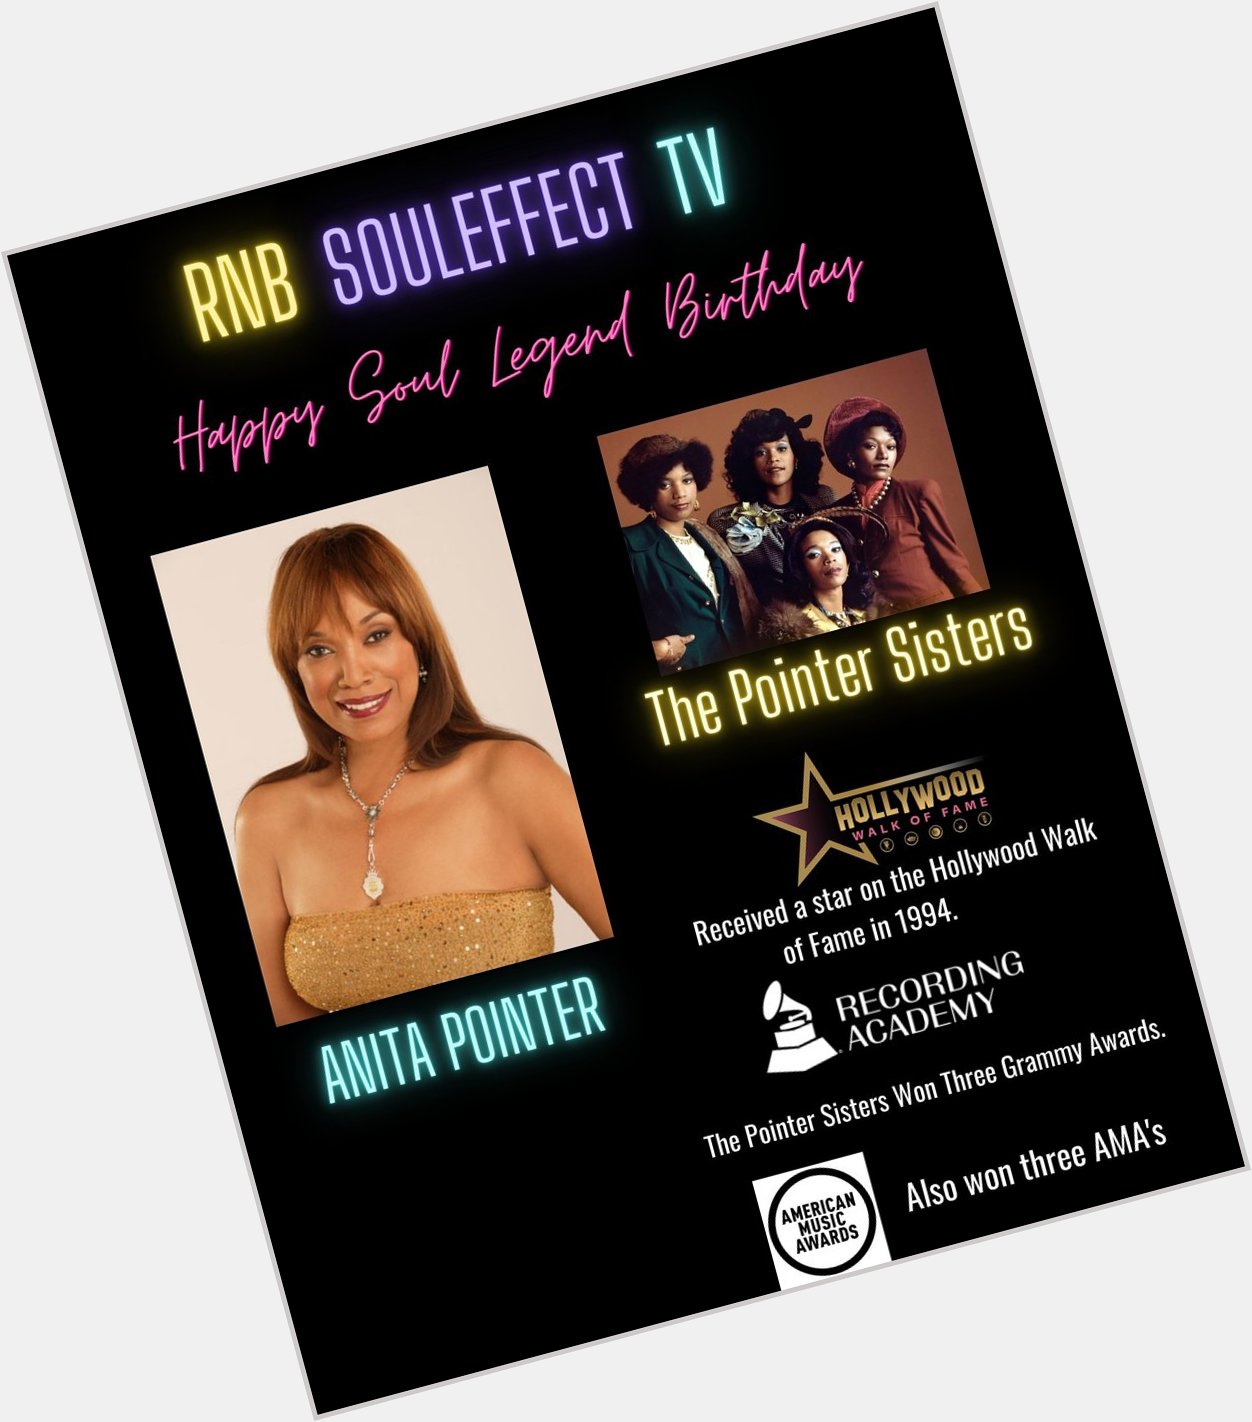 Happy Soul Legend Birthday 
Anita Baker original member of 3×grammy award group 